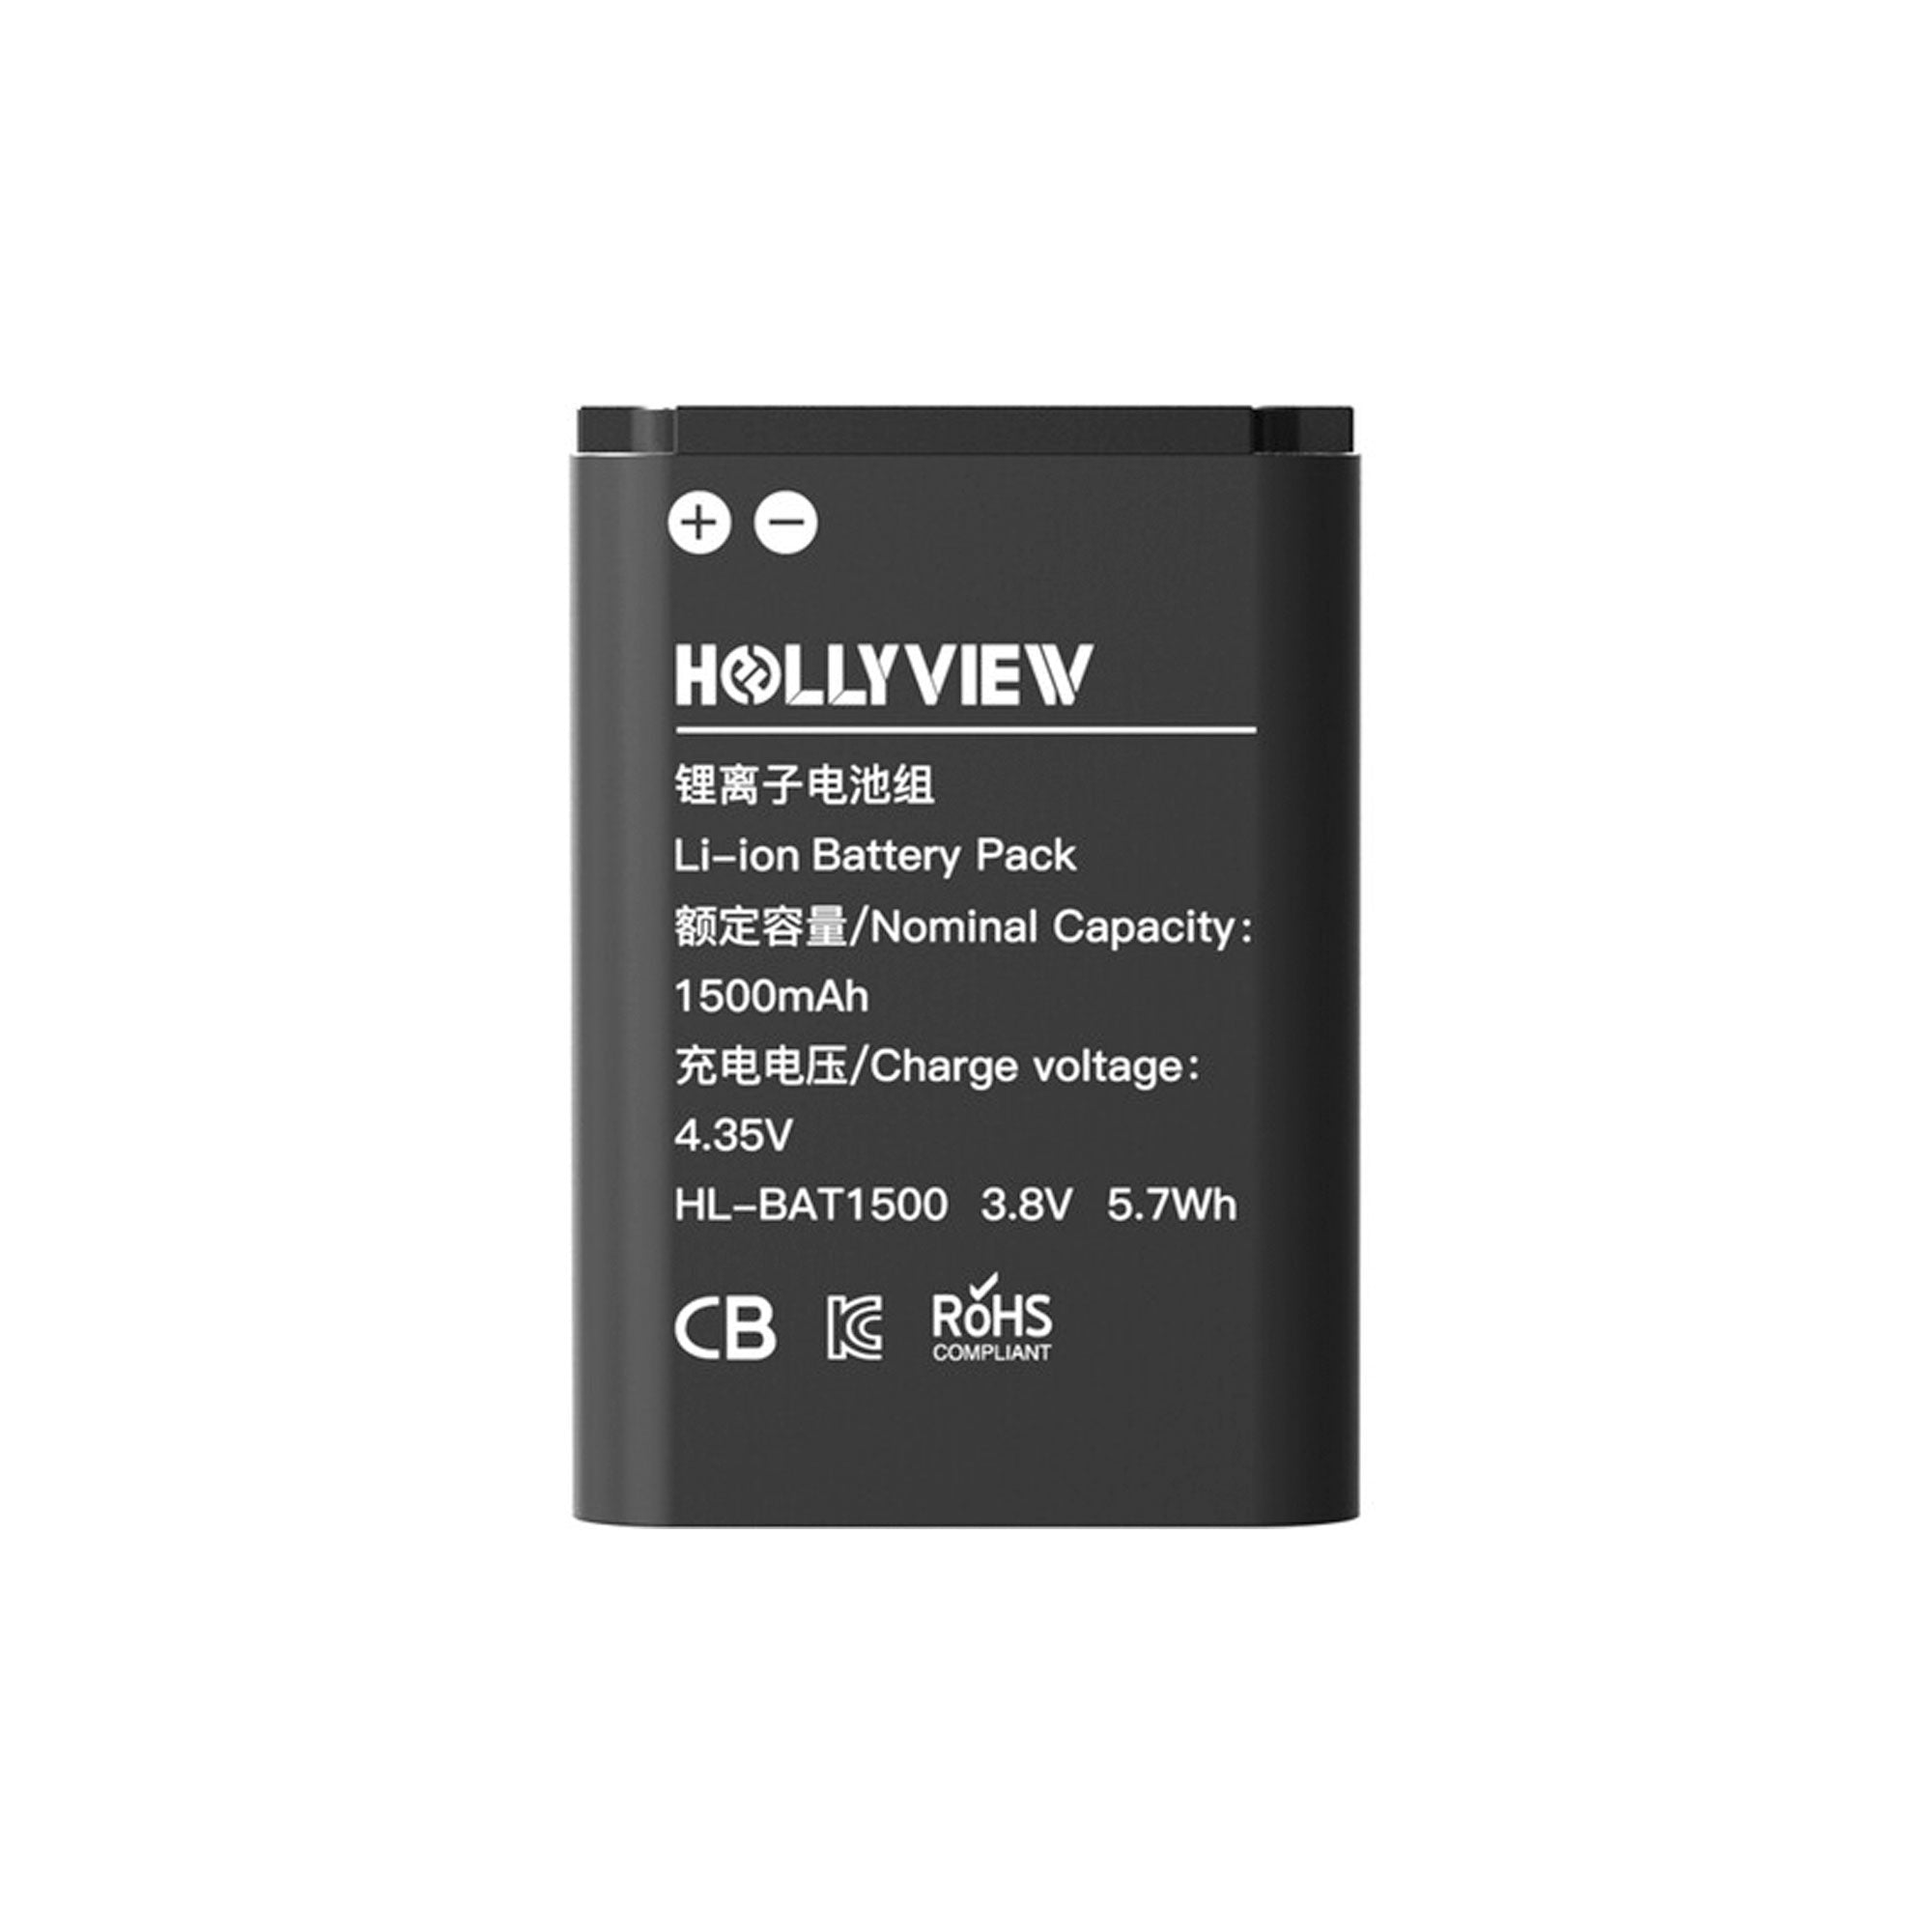 Hollyland Solidcom M1 Beltpack 250m Battery